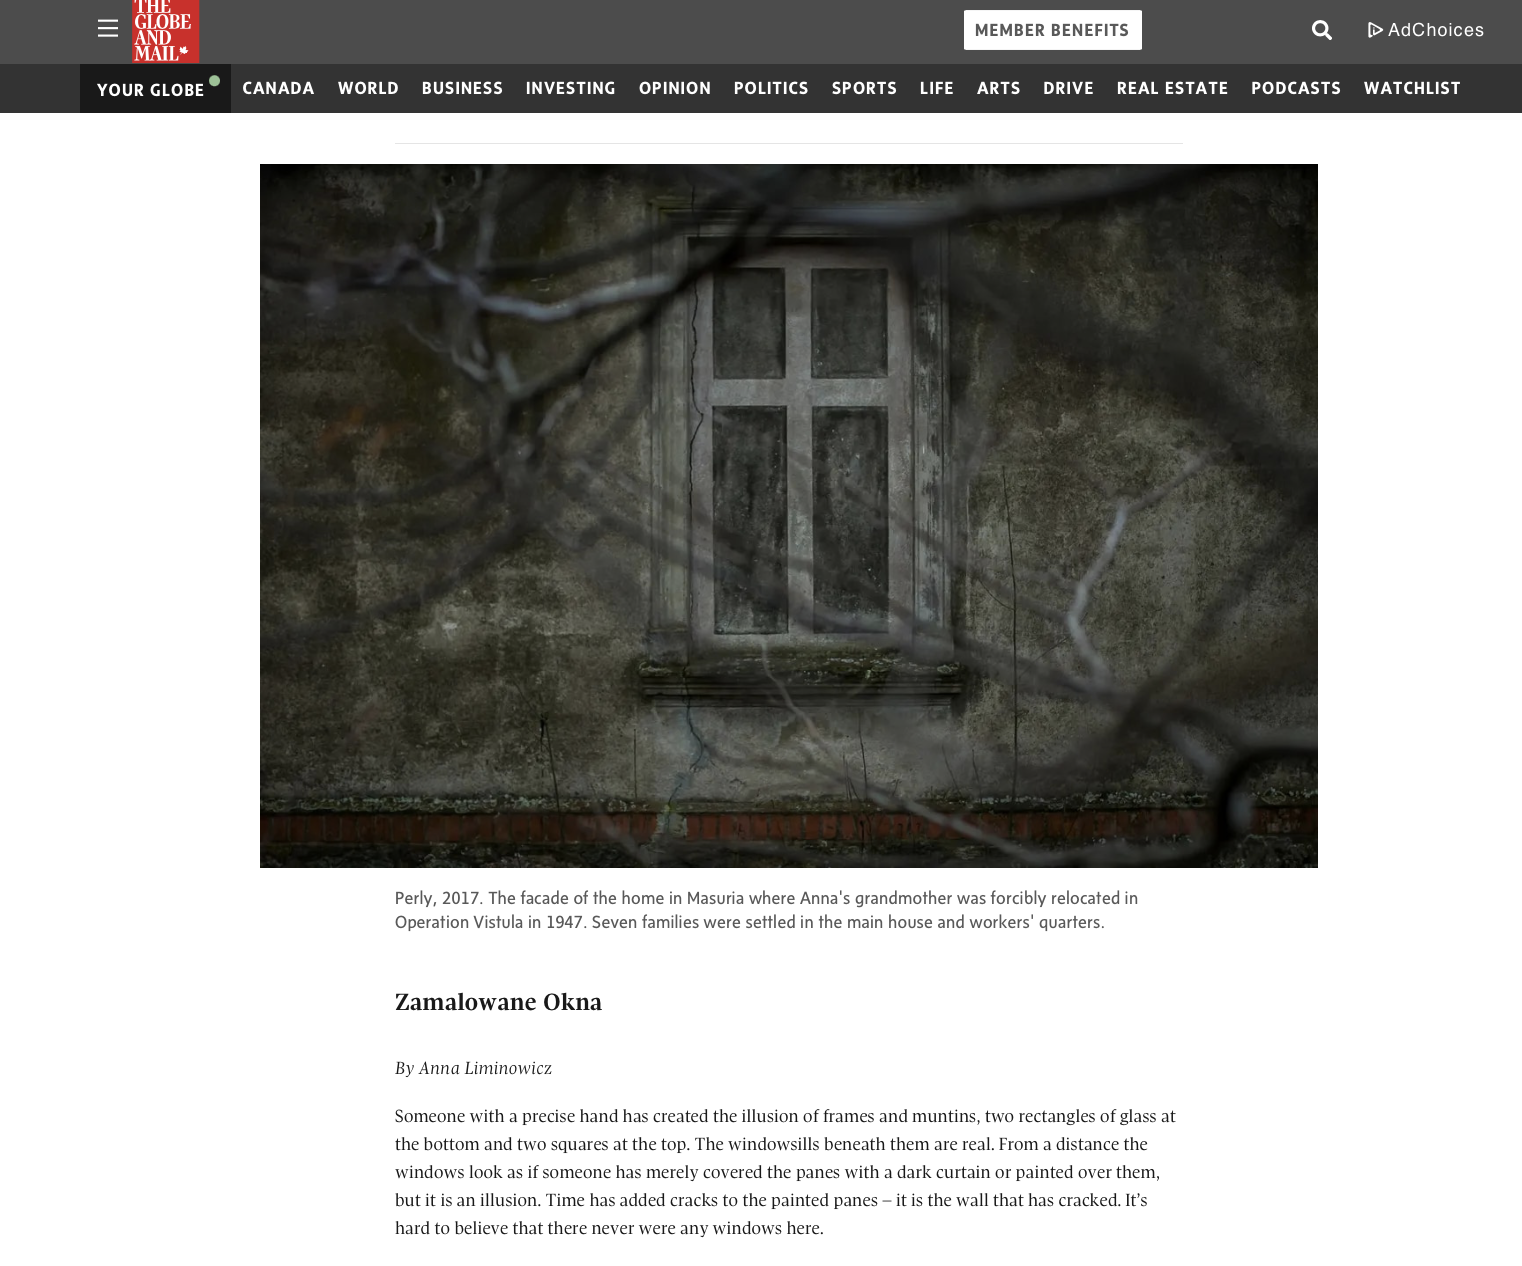 Art and Documentary Photography - Loading zamalowane_okna_anna_liminowicz_painted_over_windows_3.png